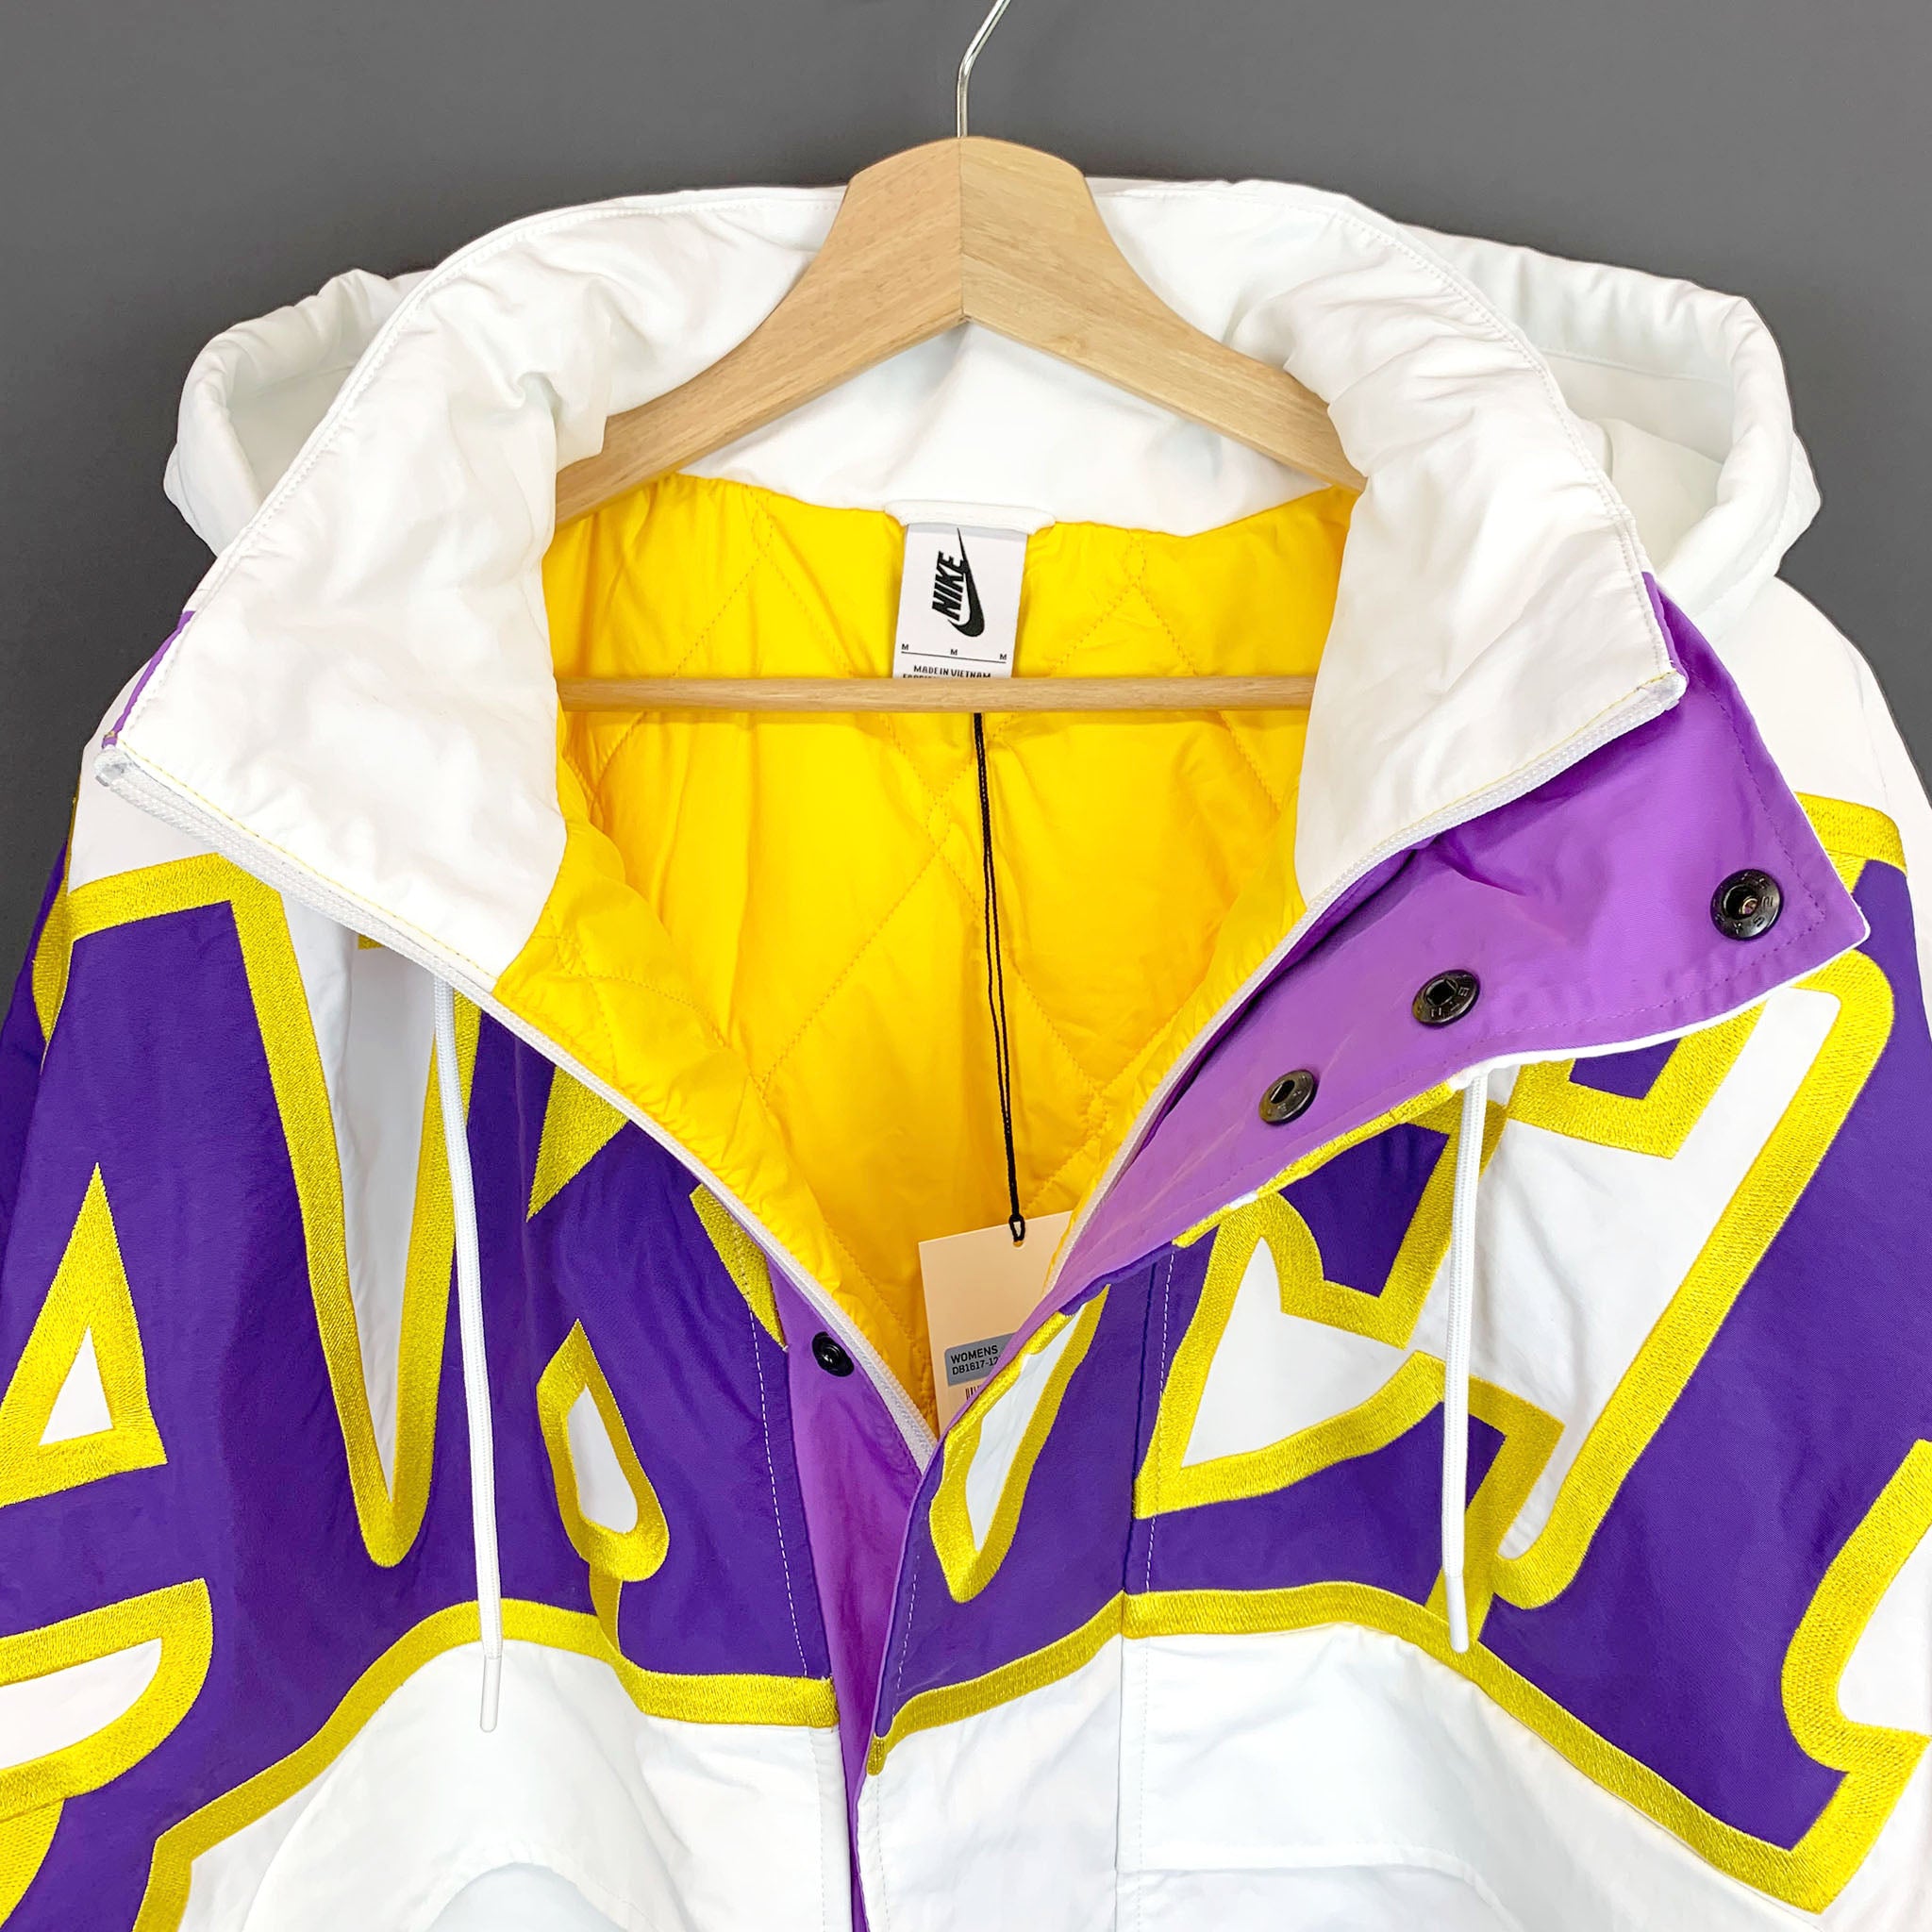 Nike + AMBUSH NBA Lakers Jacket – Limited Edt